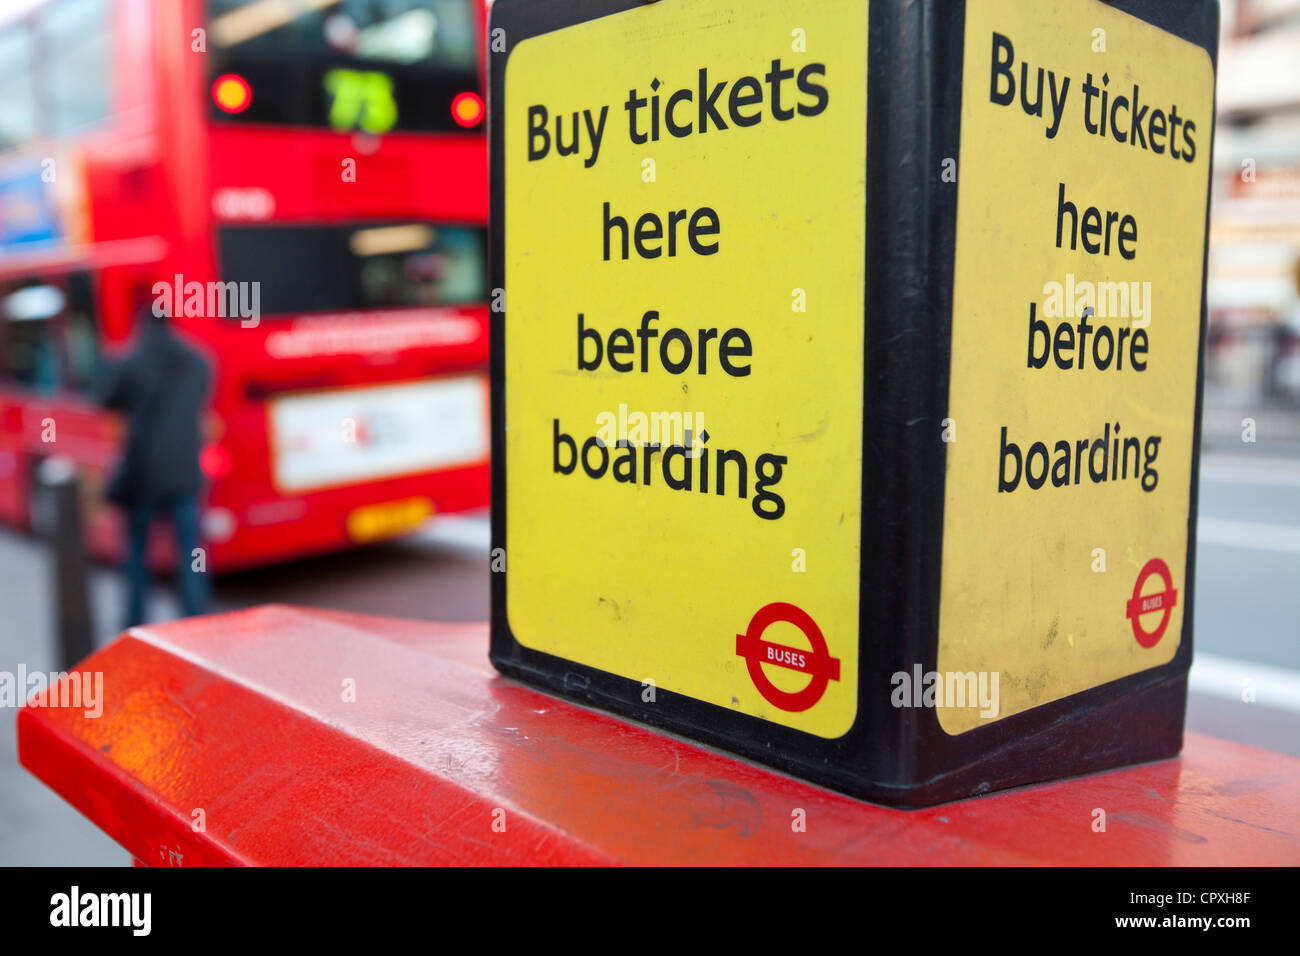 A ticket dispenser for London buses at Kings Cross, London, UK. Stock Photo